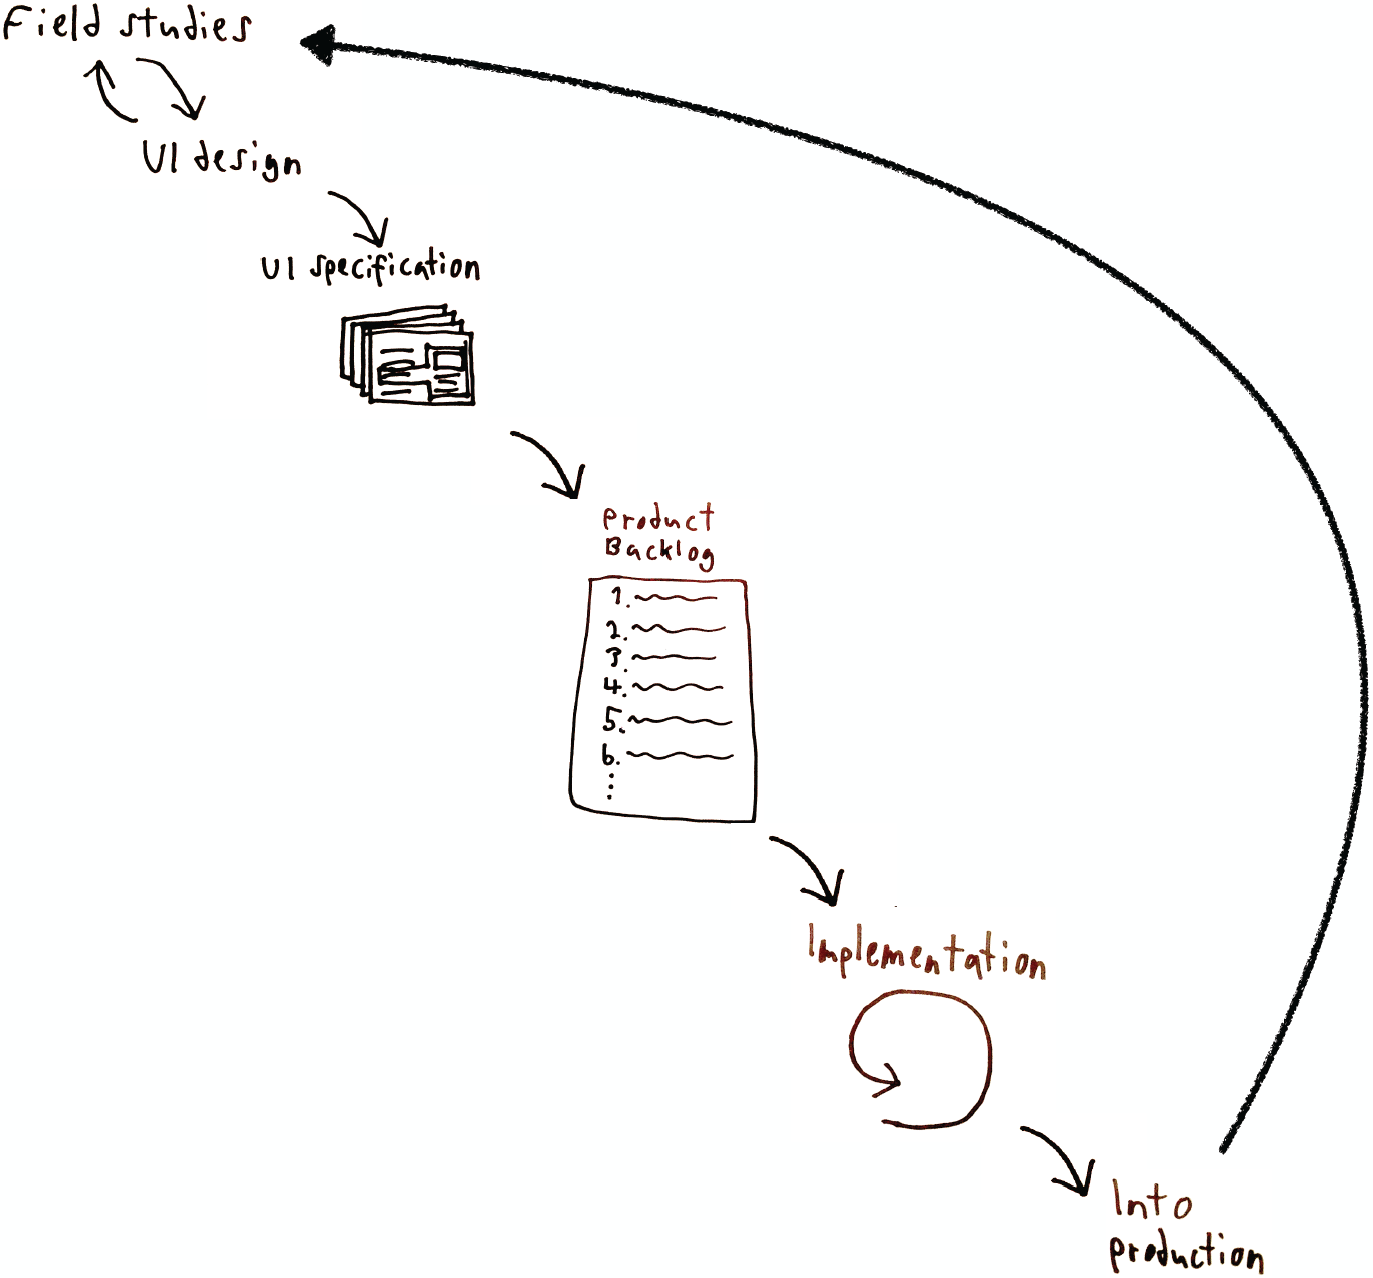 Reaktor's model of human-centered development process